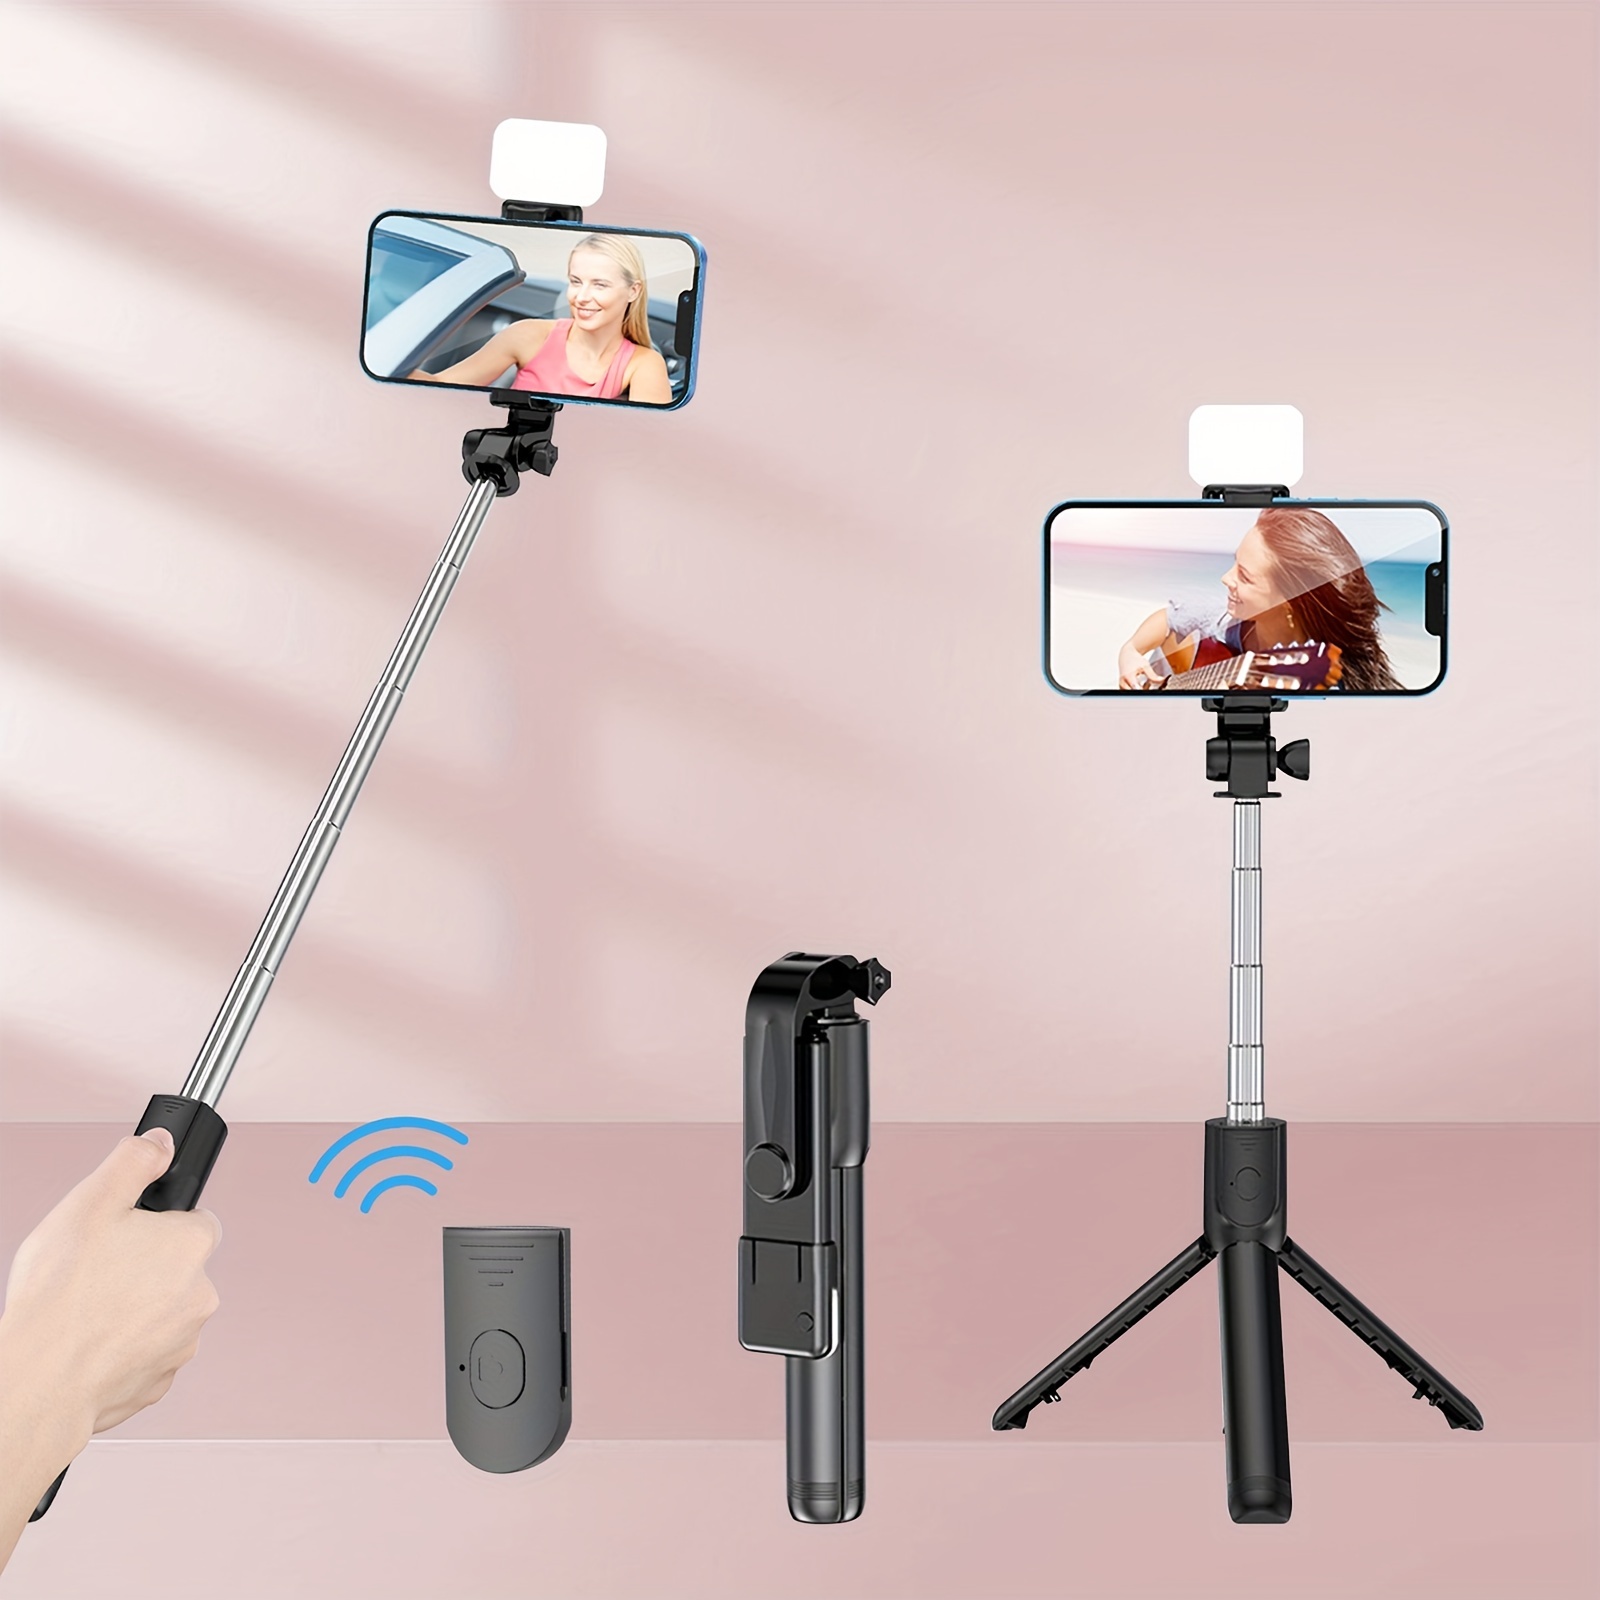 Palo Selfie Tripode Premium Para Cámaras/celulares